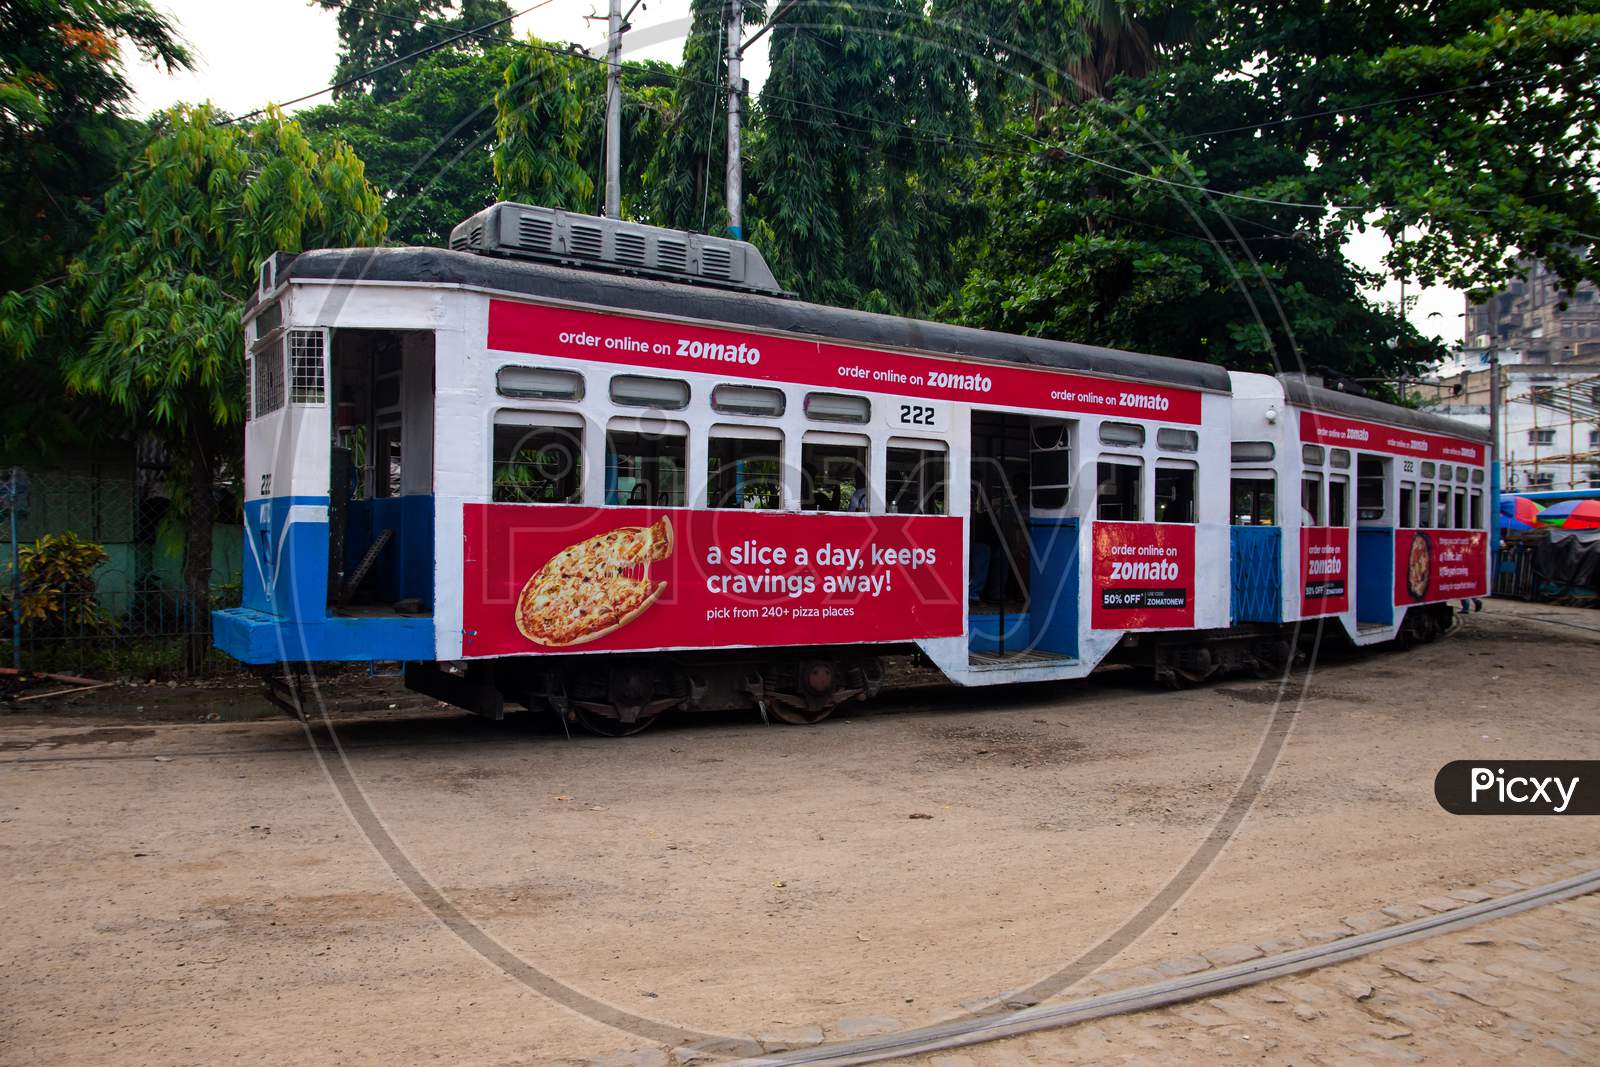 Old Heritage Calcutta tram